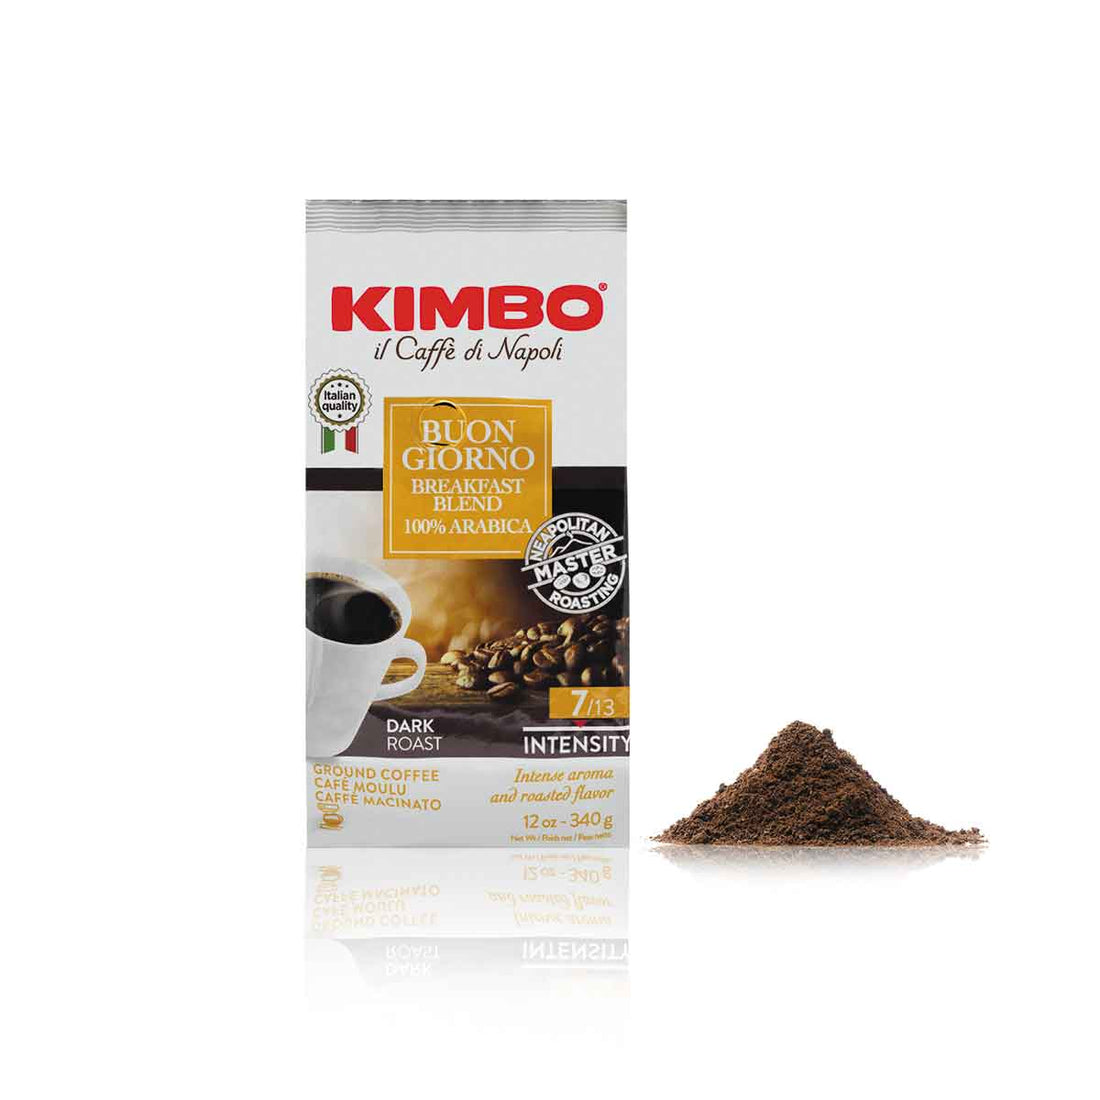 Kimbo il Caffe di Napoli Buongiorno Breakfast Blend Drip Coffee Ground 340g Bag Front With Coffee